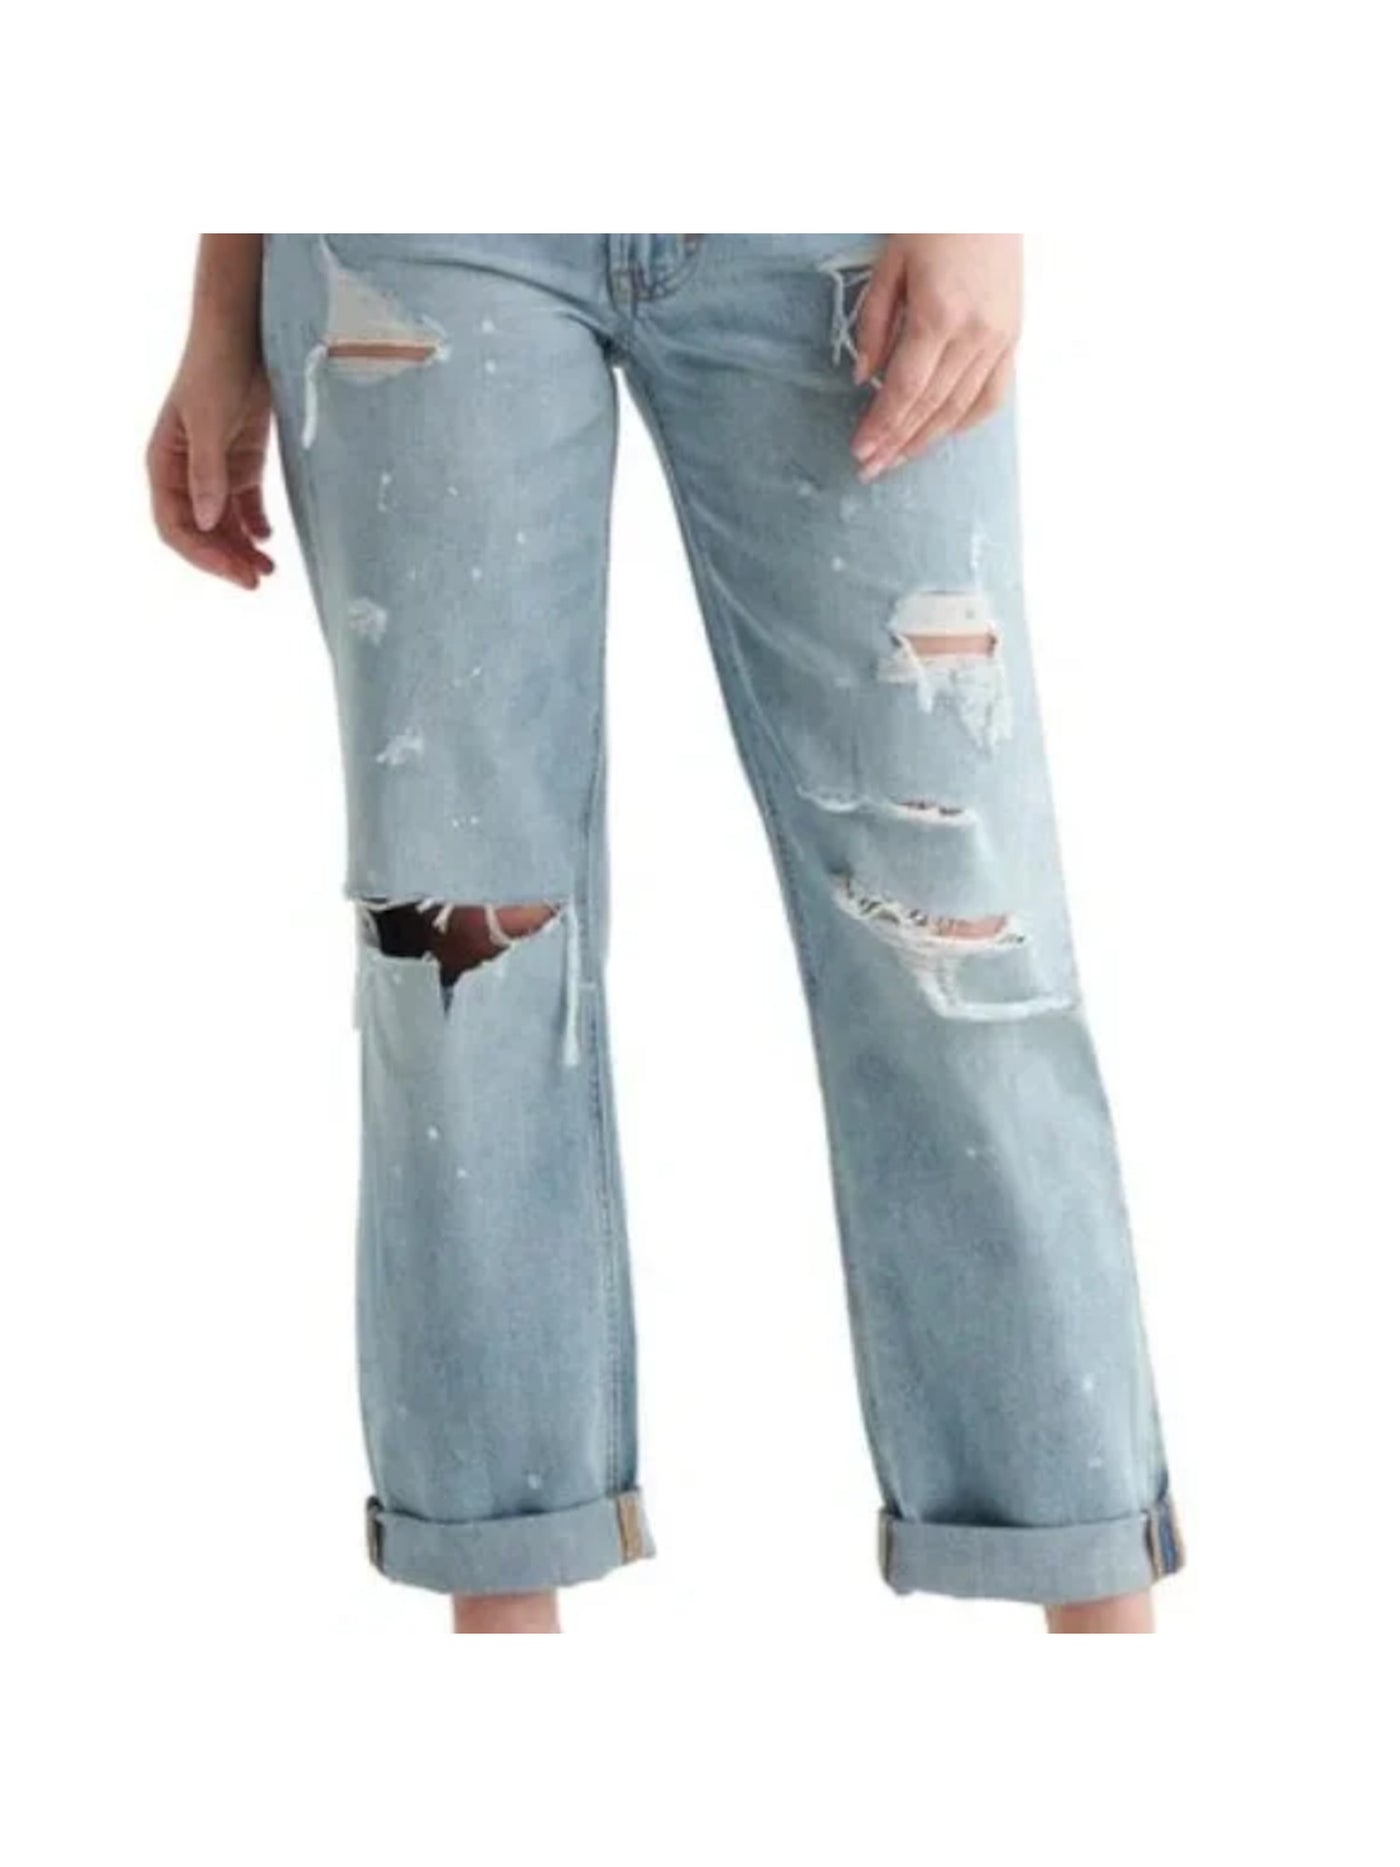 LUCKY BRAND Womens Light Blue Pocketed Zippered Mid-rise Boyfriend Jeans 0/25